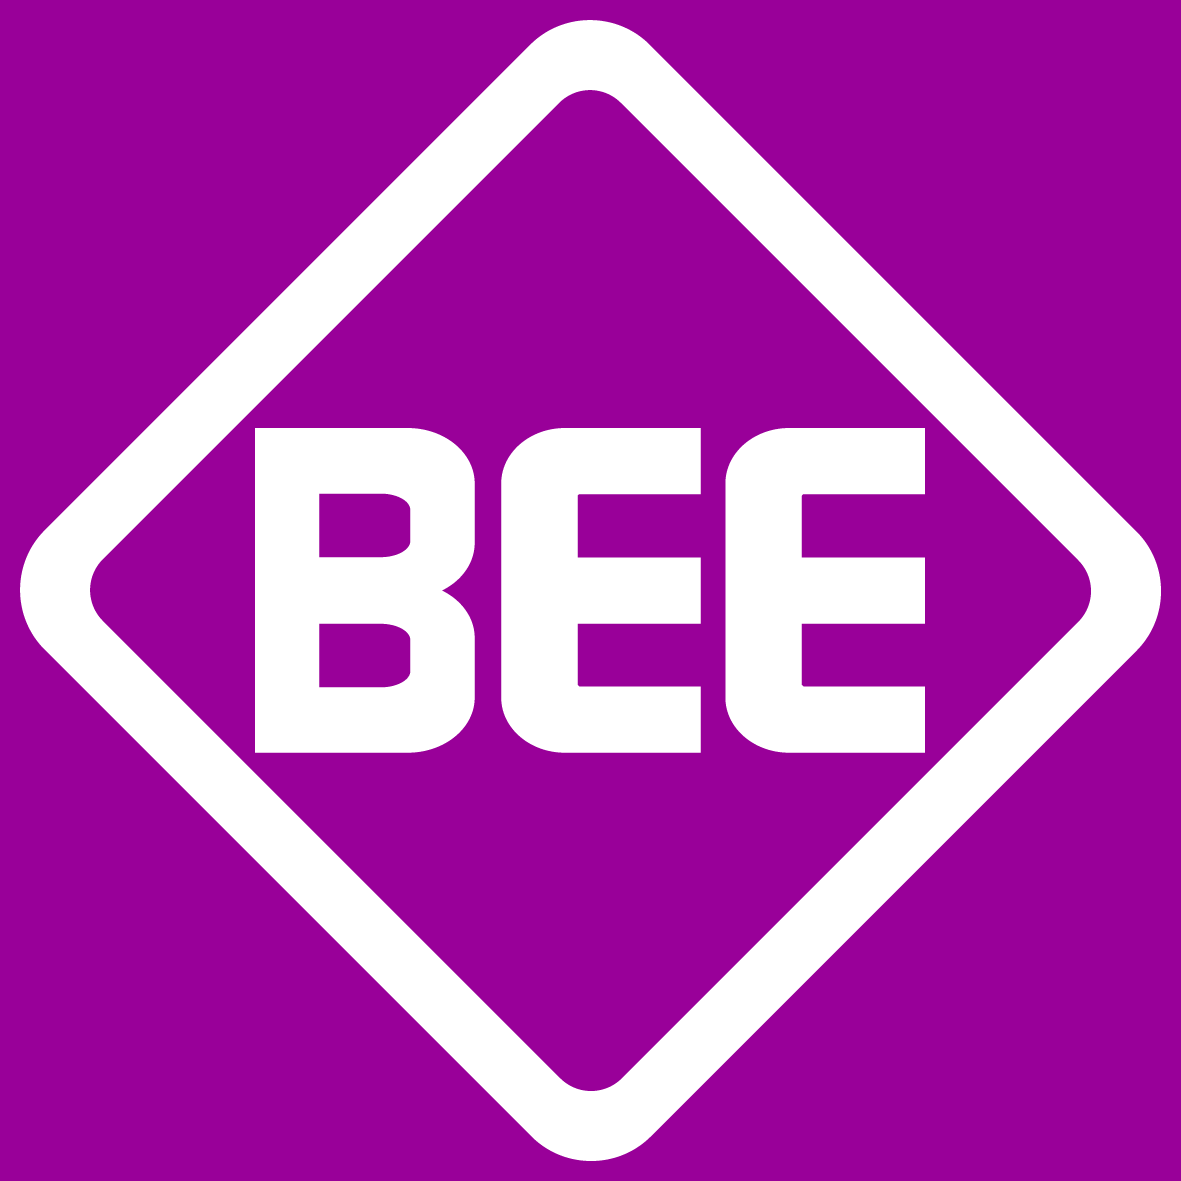 G. Bee Logo